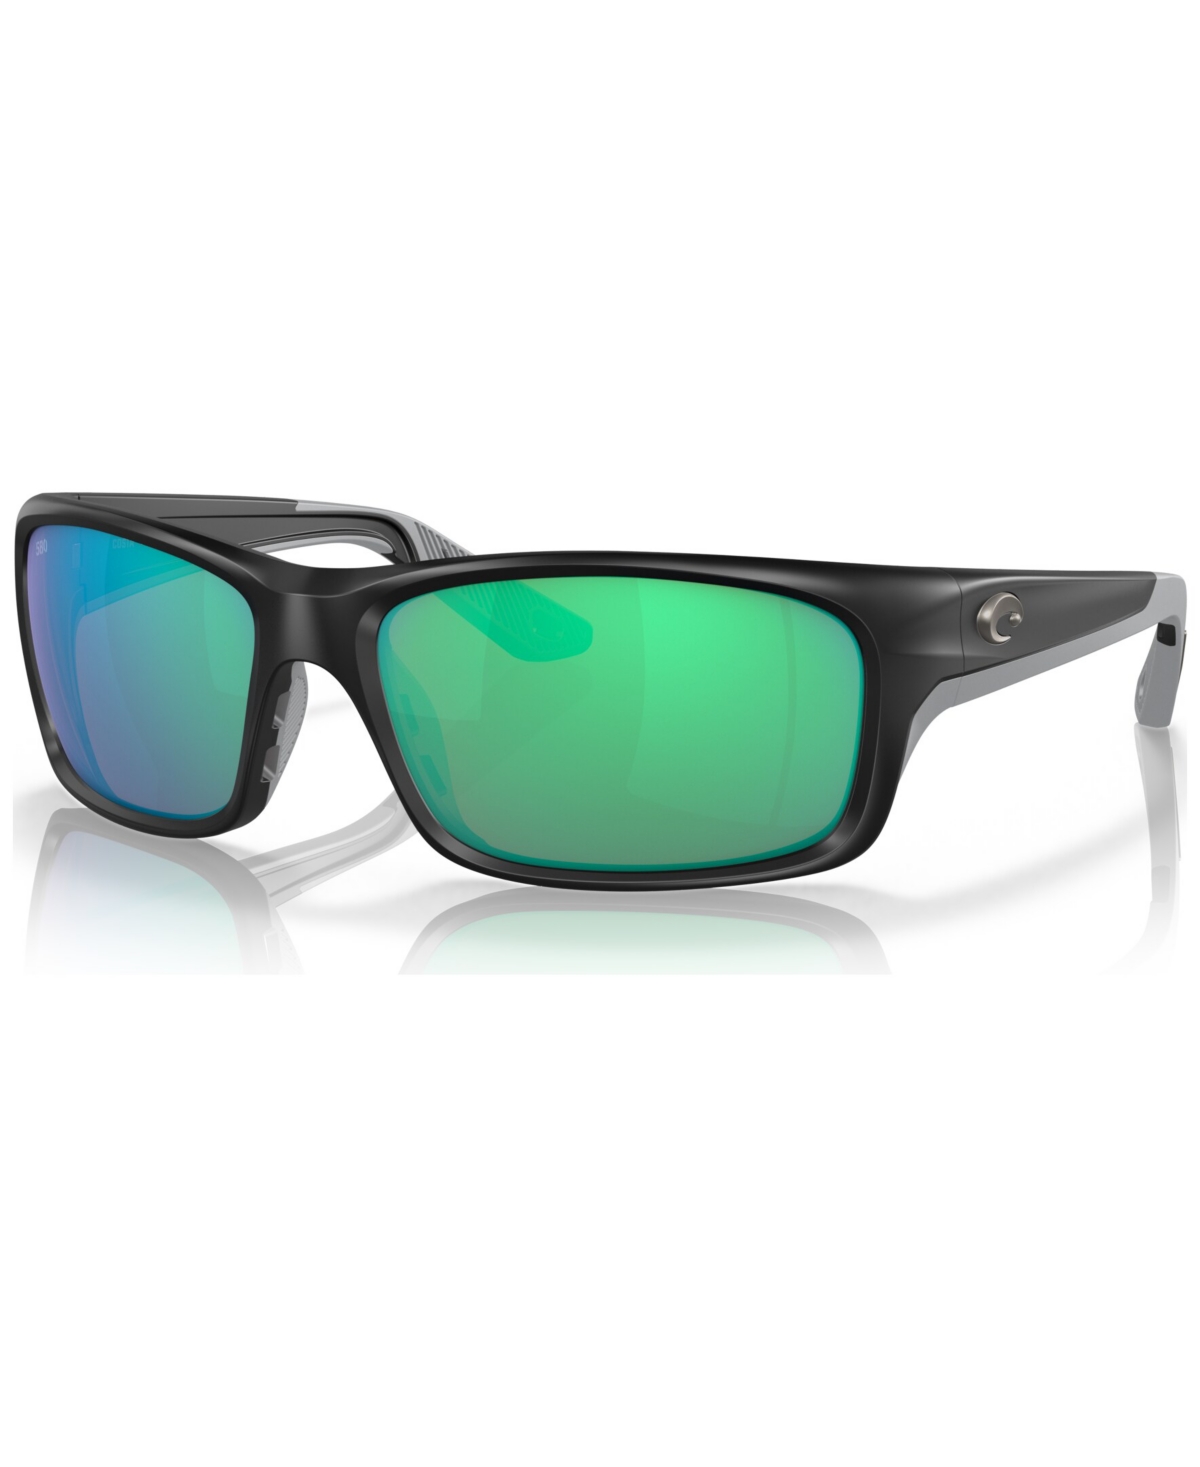 Men's Polarized Sunglasses, 6S9106-02 - Matte Black